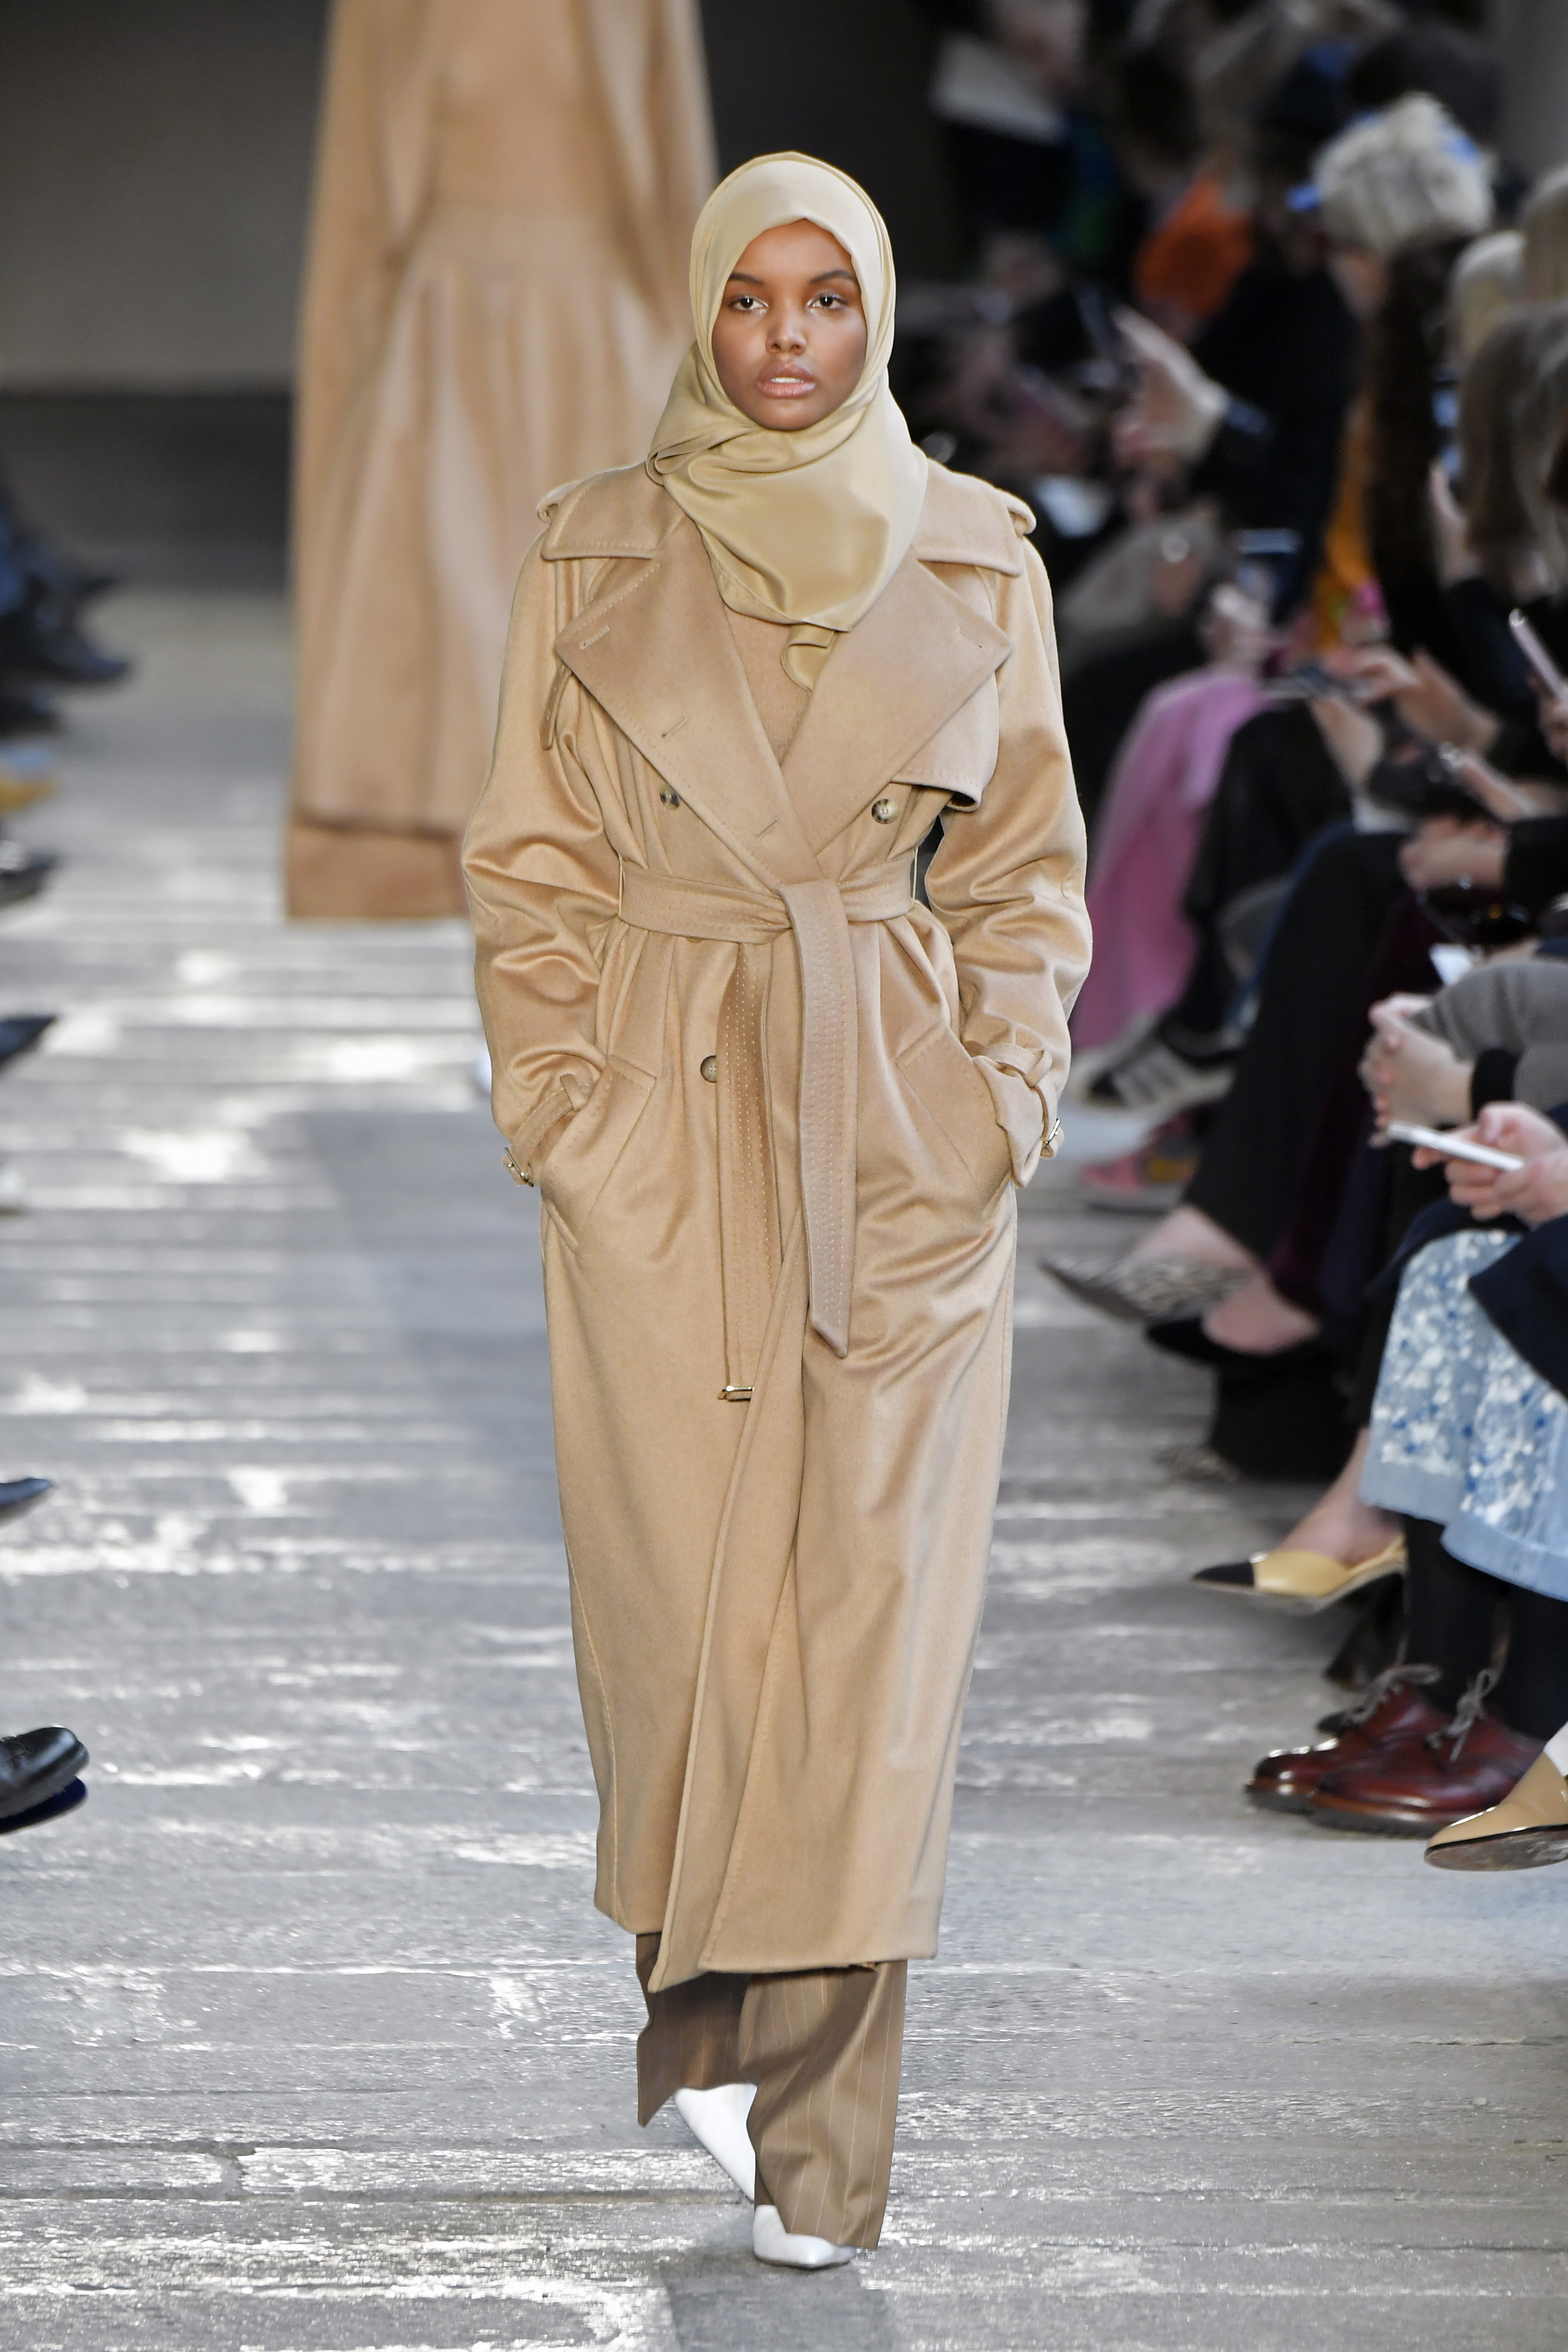 MILAN, ITALY - FEBRUARY 23: Halima Aden walks the runway at the Max Mara show during Milan Fashion Week Fall/Winter 2017/18 on February 23, 2017 in Milan, Italy. (Photo by Victor Boyko/Getty Images) (Victor Boyko—Getty Images)